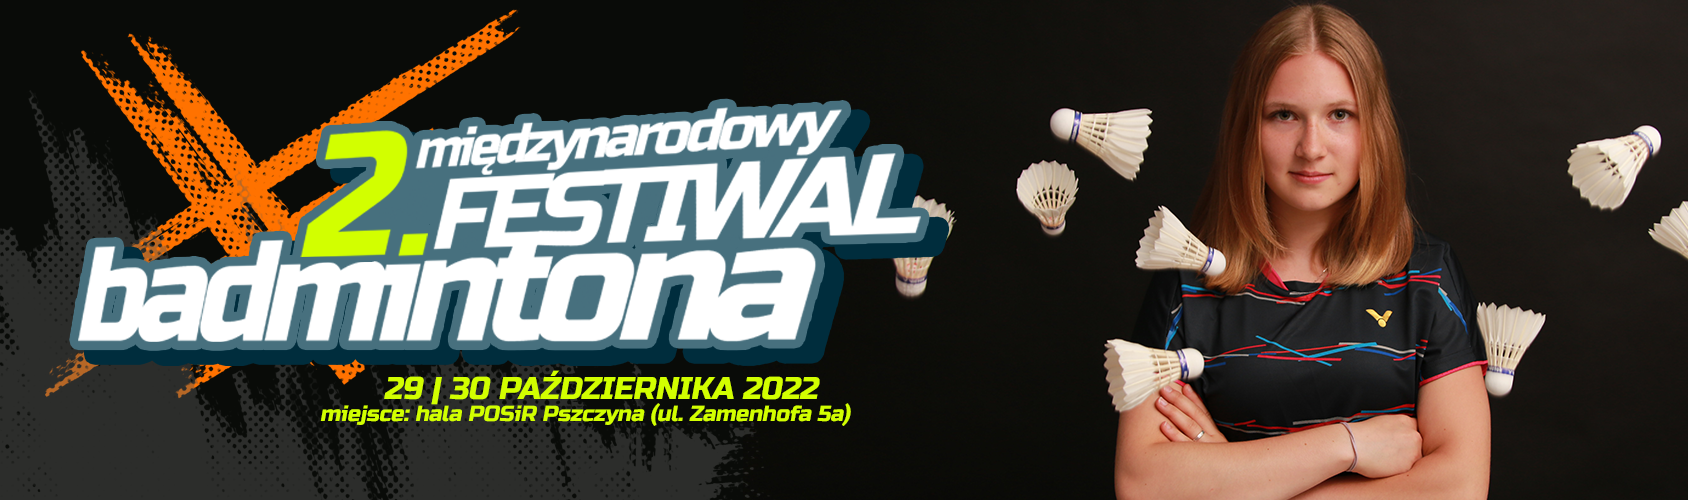 Festiwal Badmintona - baner informacyjny